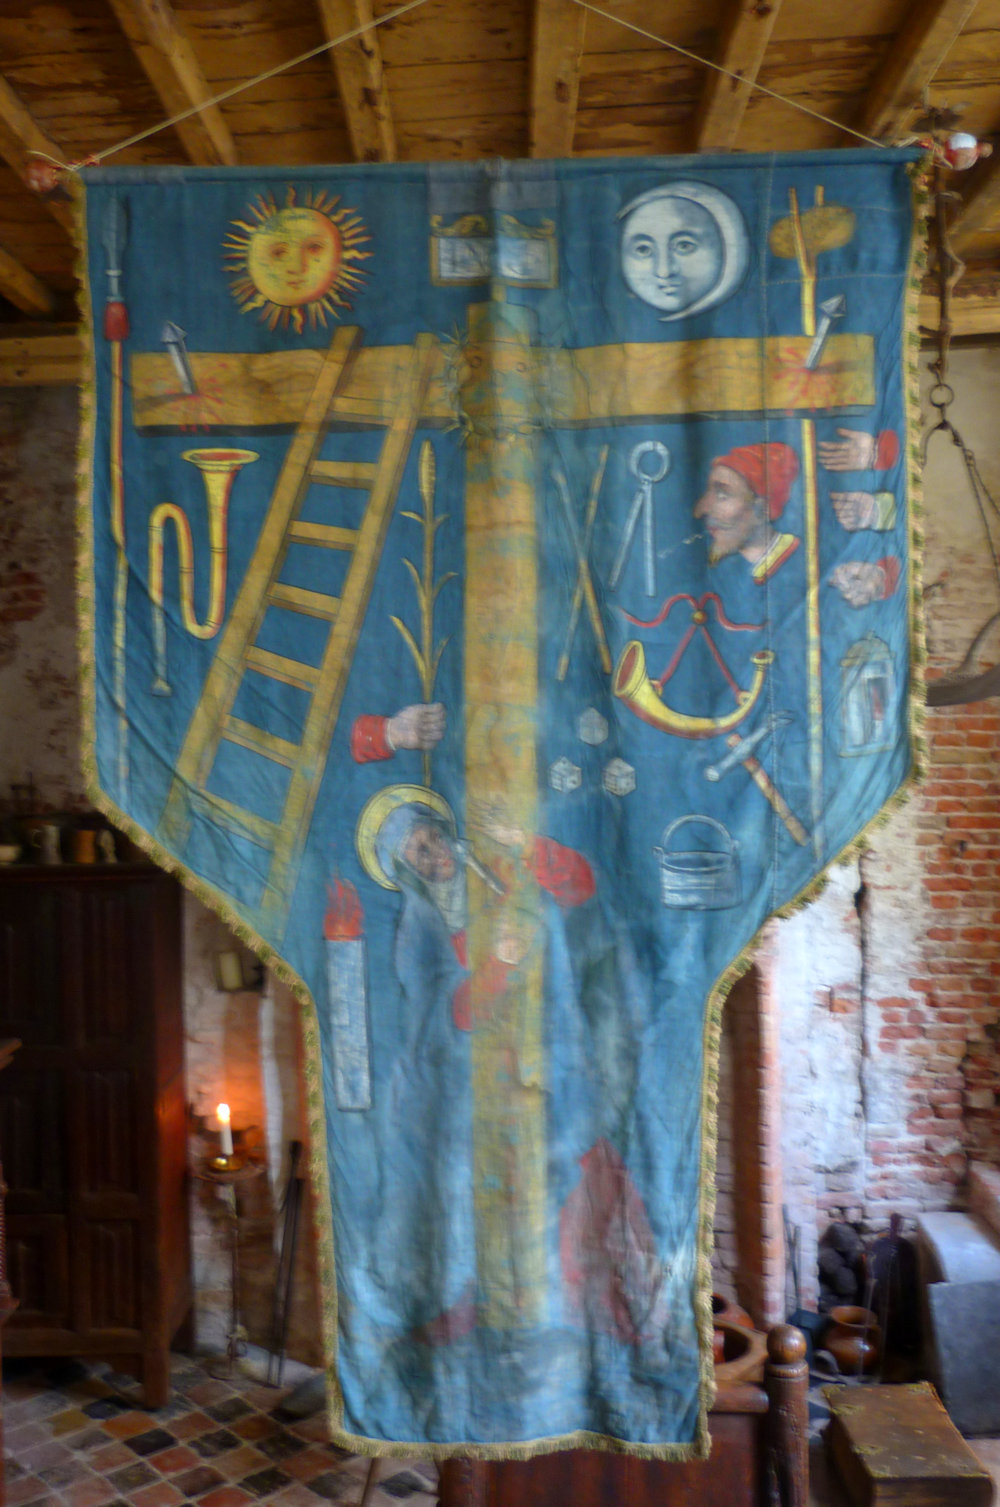 A Catholic banner